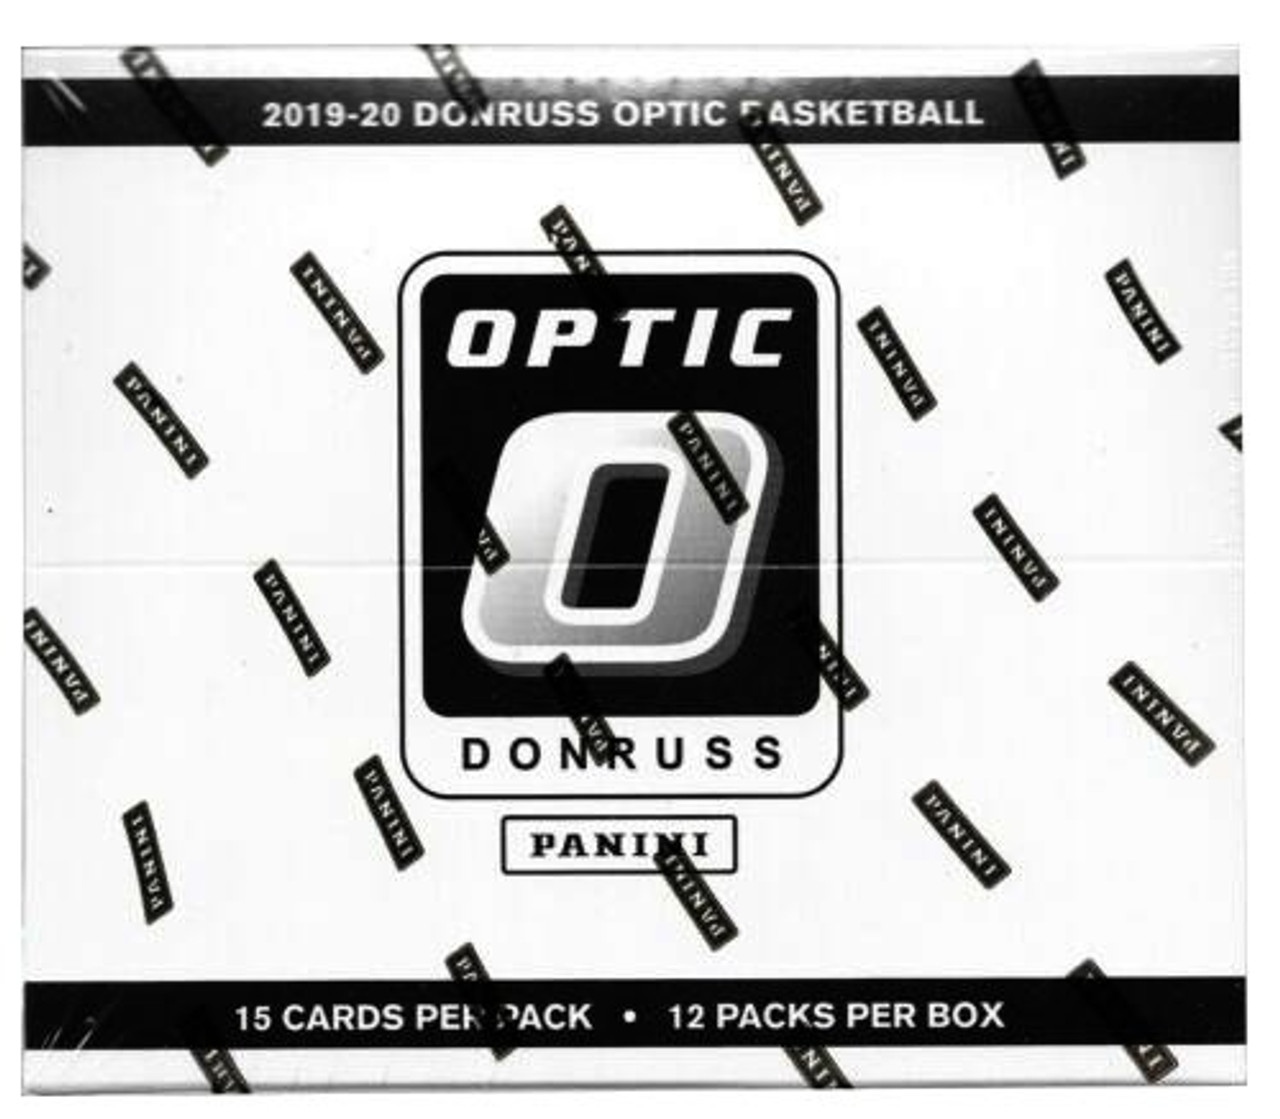 Nba Panini 2019 20 Donruss Optic Basketball Trading Card Cello Box 12 Packs Toywiz - aimbot roblox hoops hoops 2019 05 07